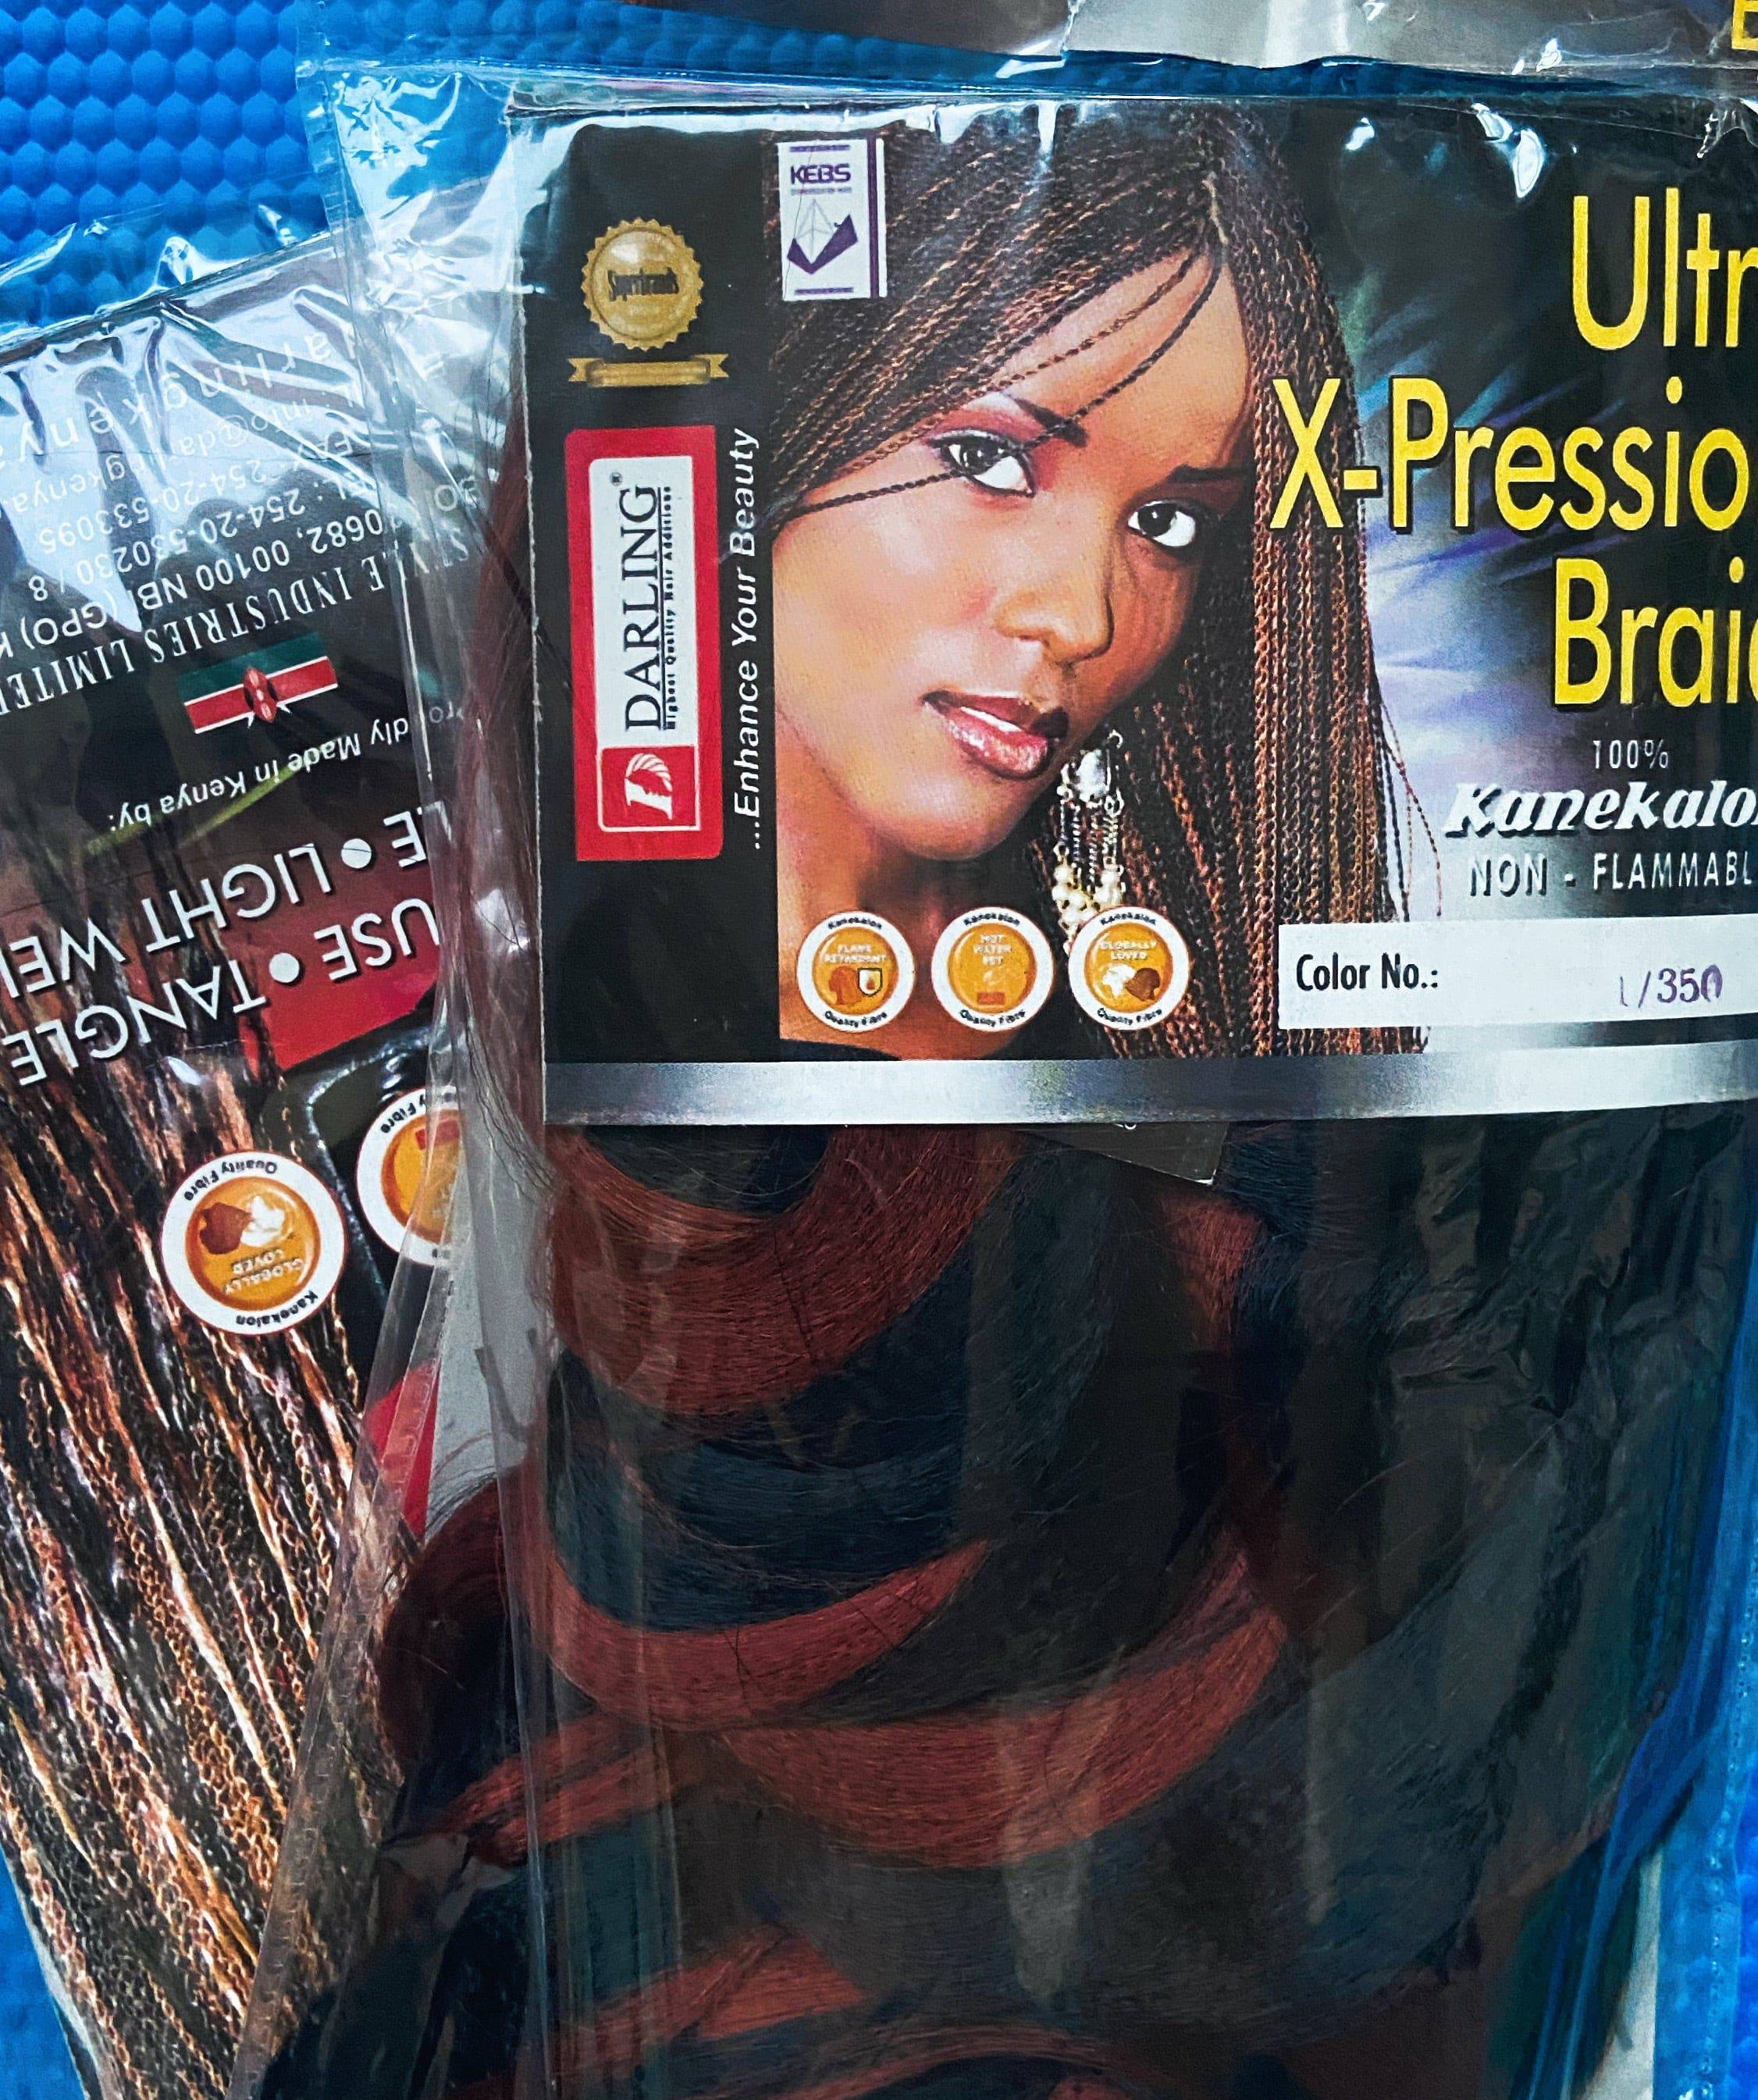 Authentic Ultra-Xpression Braid Hair Color 1/350 | Studio 7 Hair & Braids